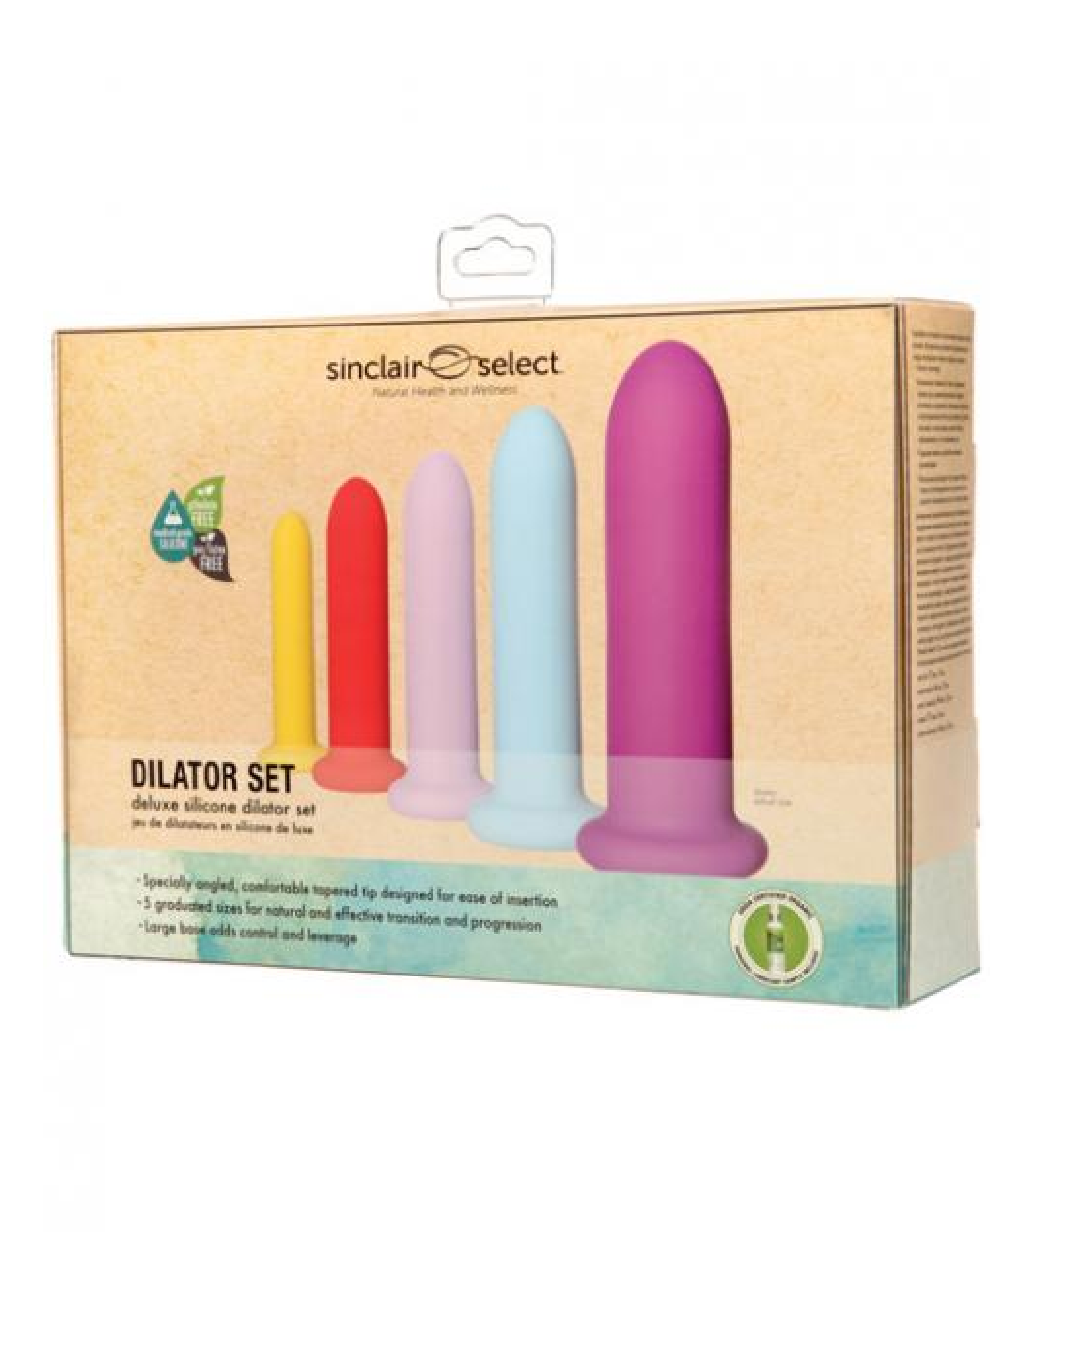 Sinclair Select Silicone Vaginal Dilator Set box set 